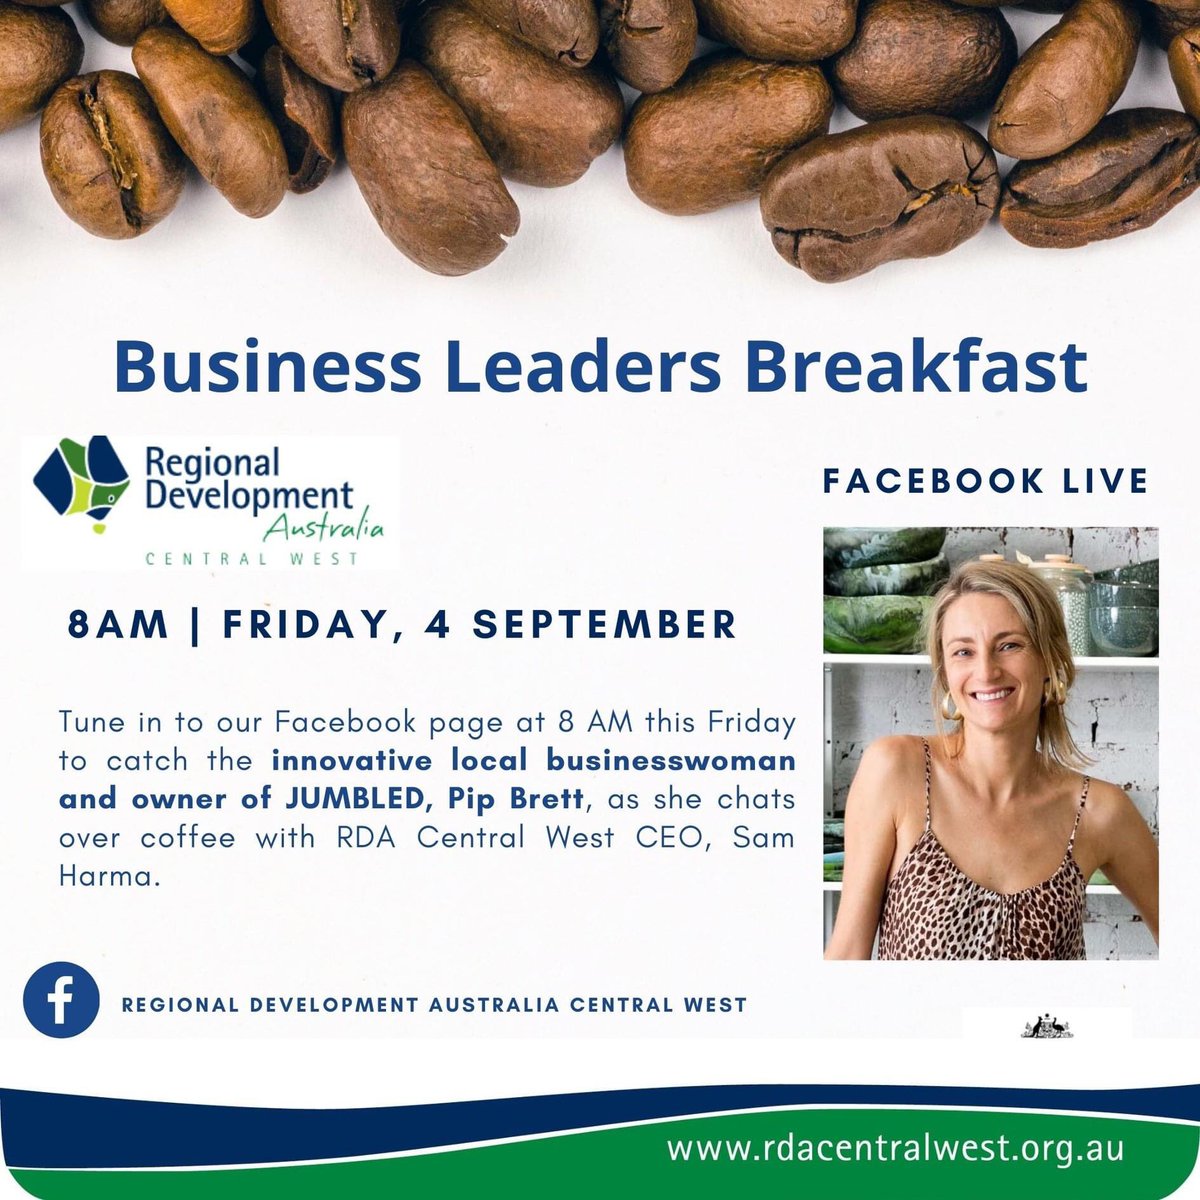 #businessleadersbreakfast